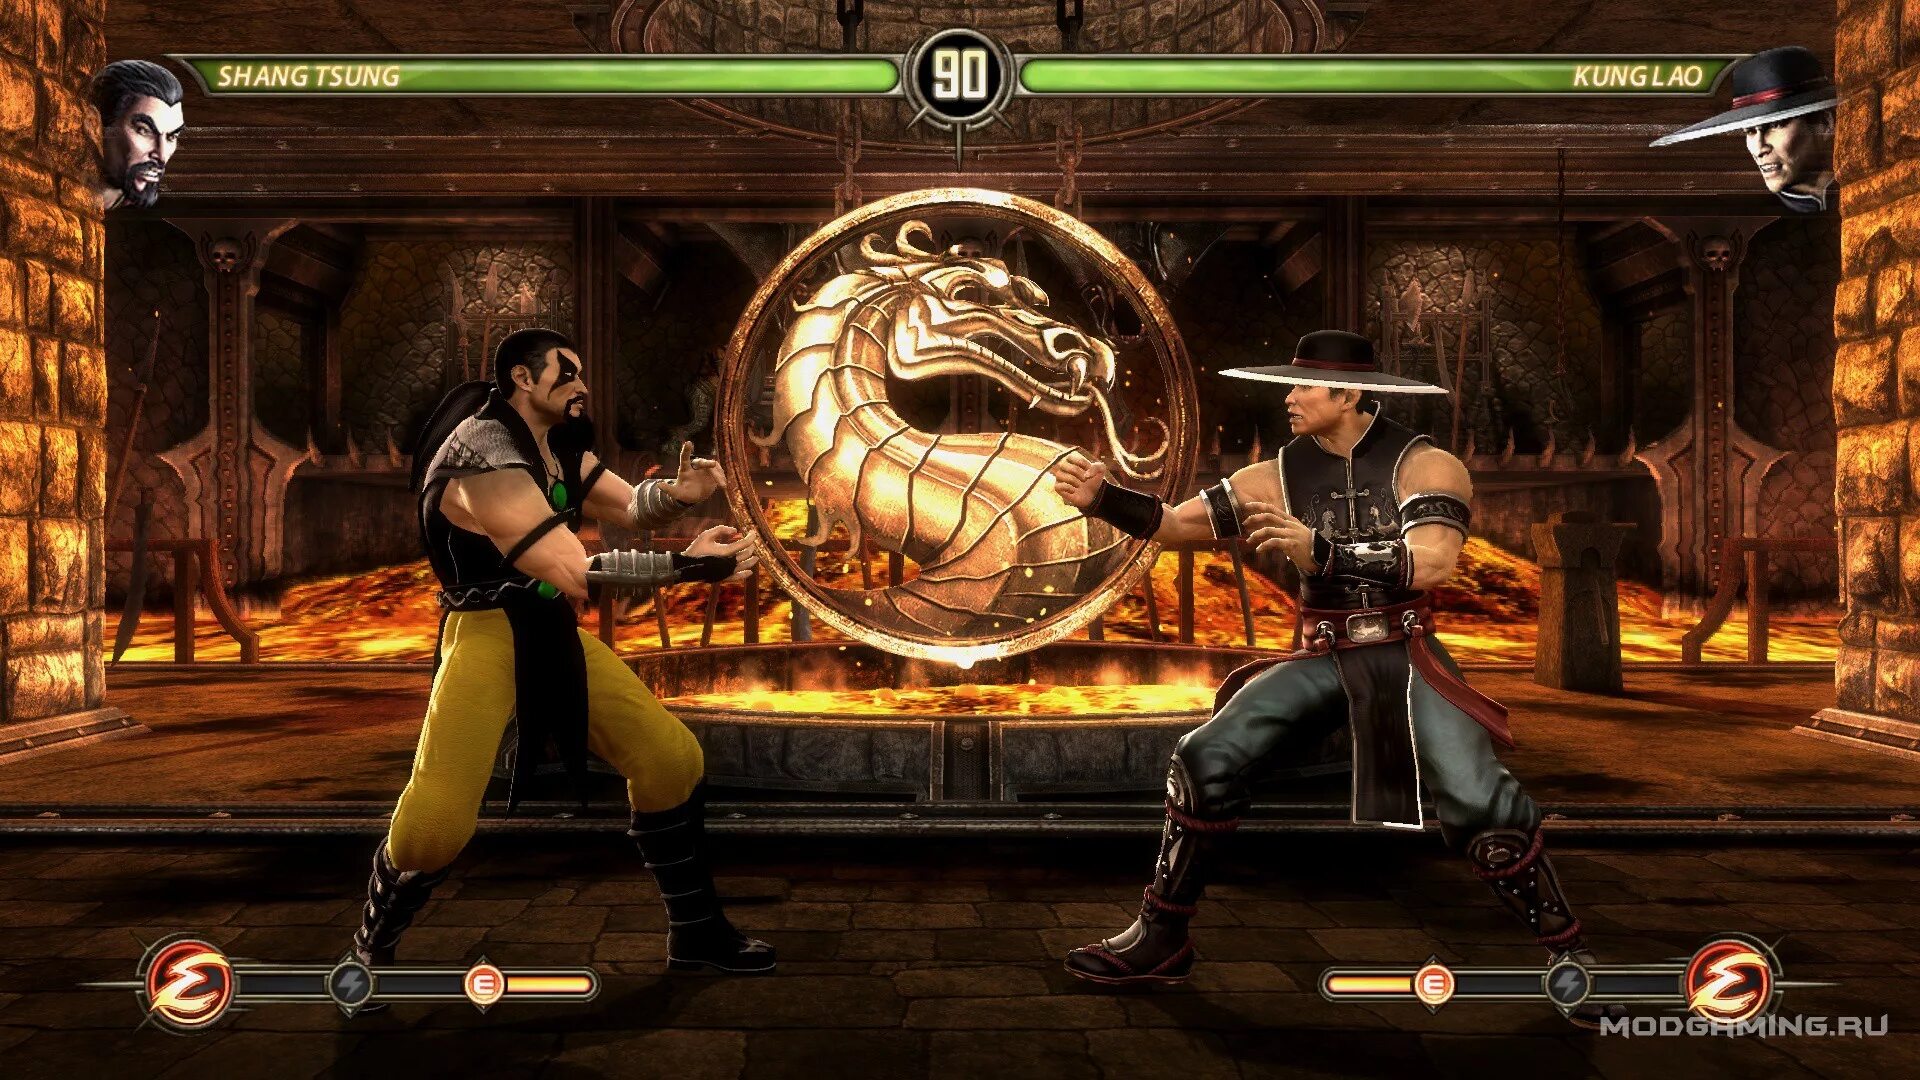 Музыка мортал 1. Шанг Цунг мортал комбат 3. Игра мортал комбат игра мортал комбат. Mortal Mortal Kombat 3 Shang Tsung. Mortal Kombat 2002.